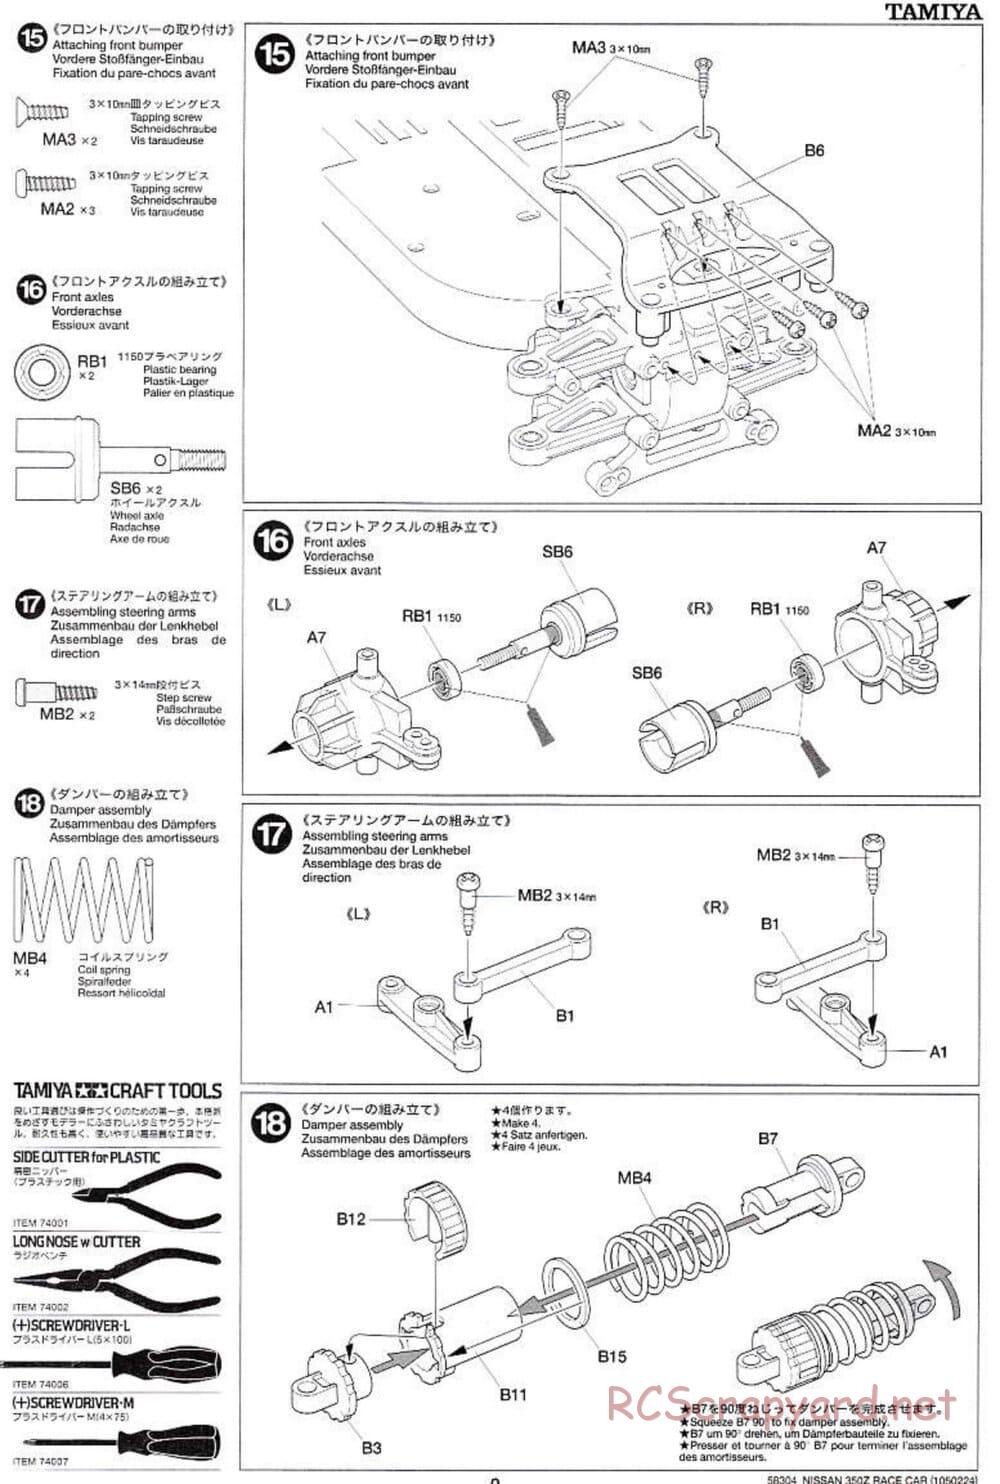 Tamiya - Nissan 350Z Race-Car - TT-01 Chassis - Manual - Page 9